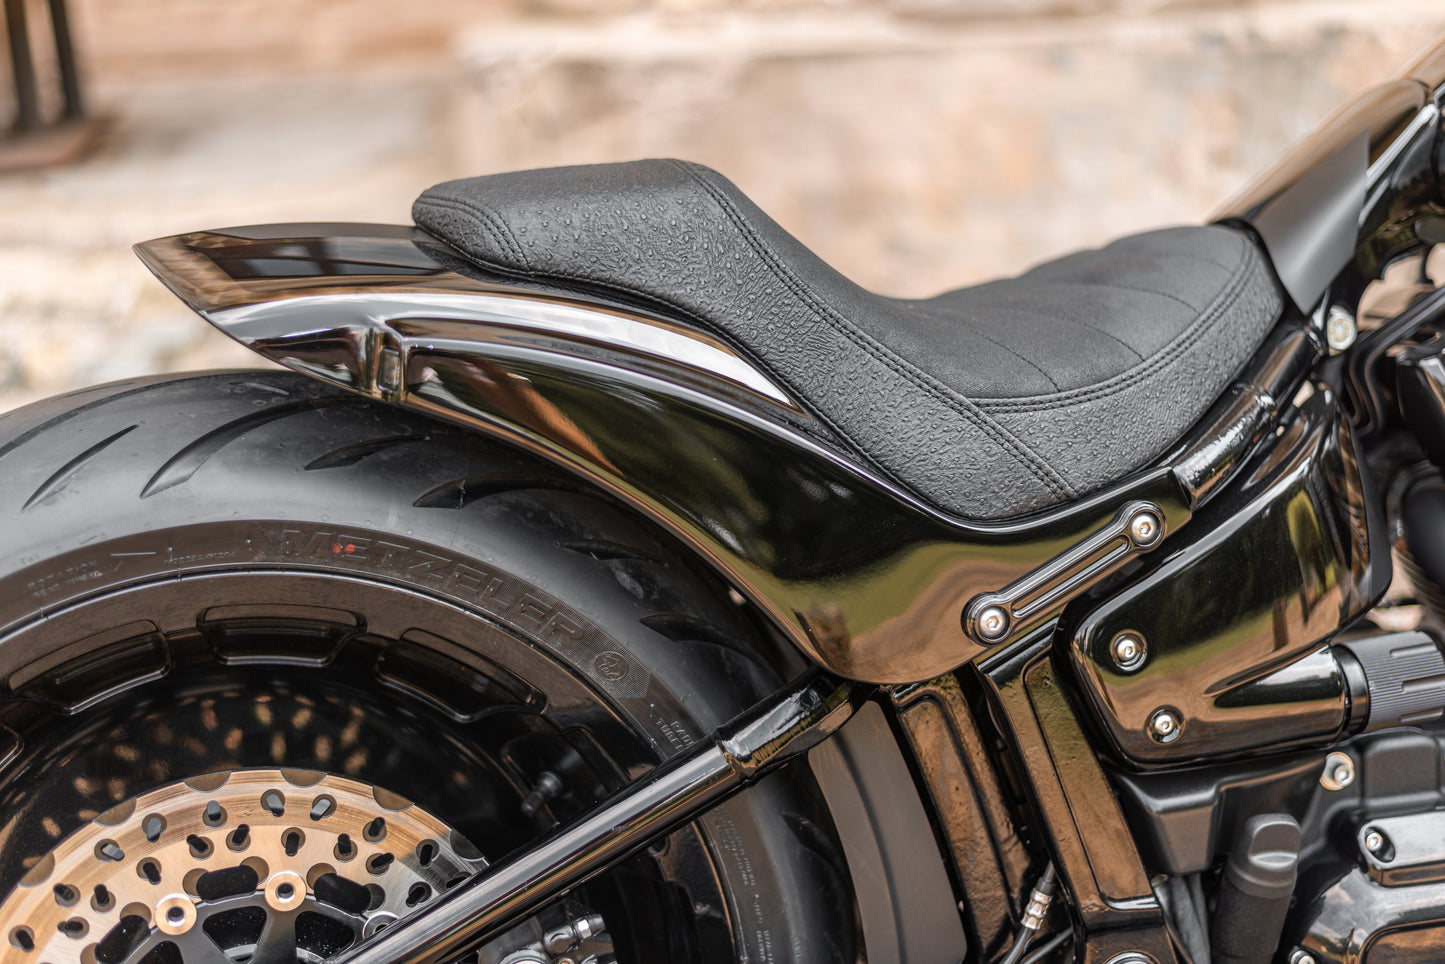 Zoomed Harley Davidson motorcycle with Killer Custom "Avenger" rear fender kit from the side blurred background